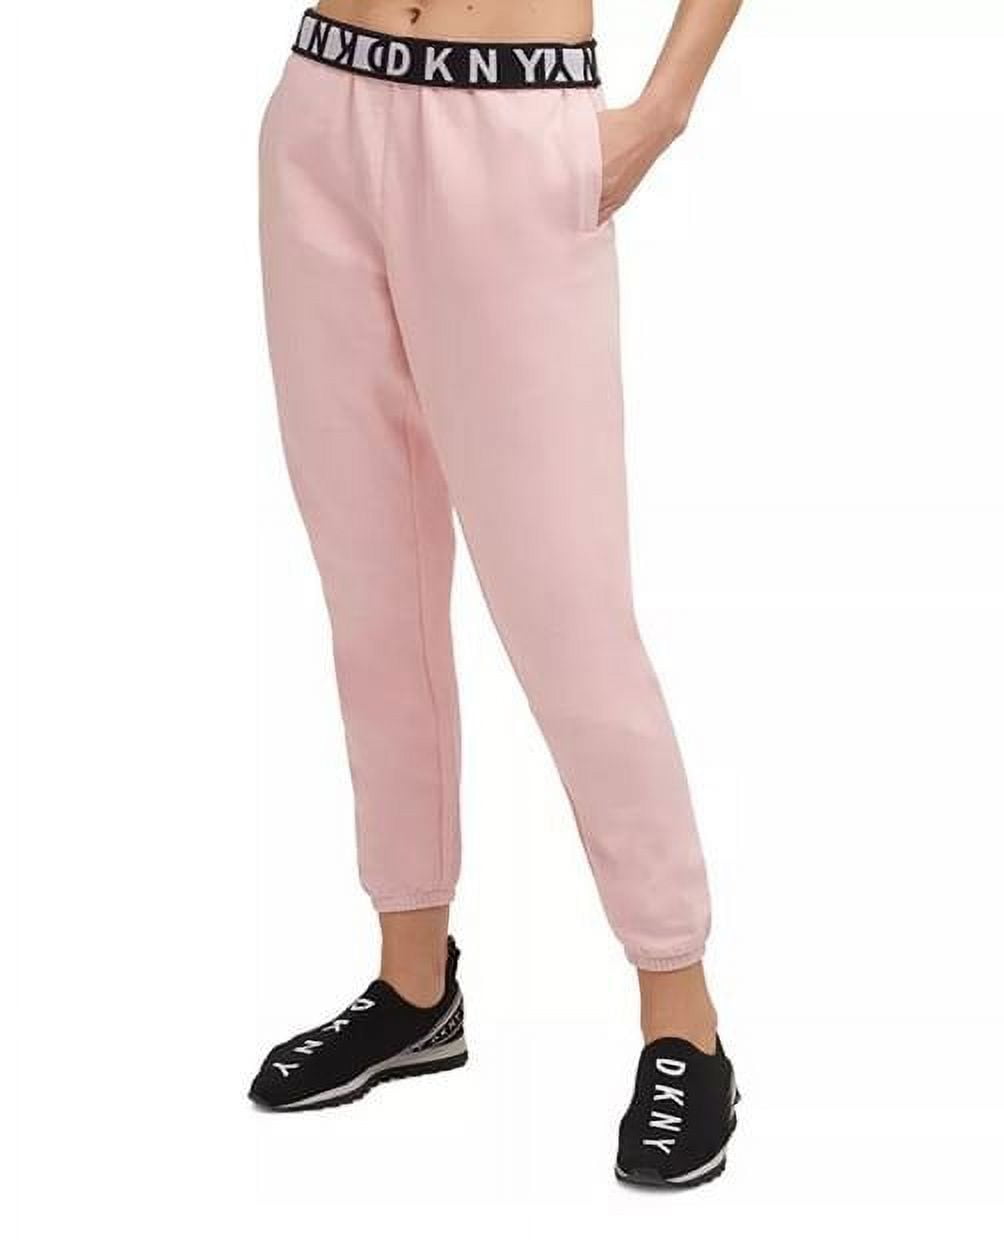 DKNY Sport Women's Cotton Jogger Pants Pink Size Small